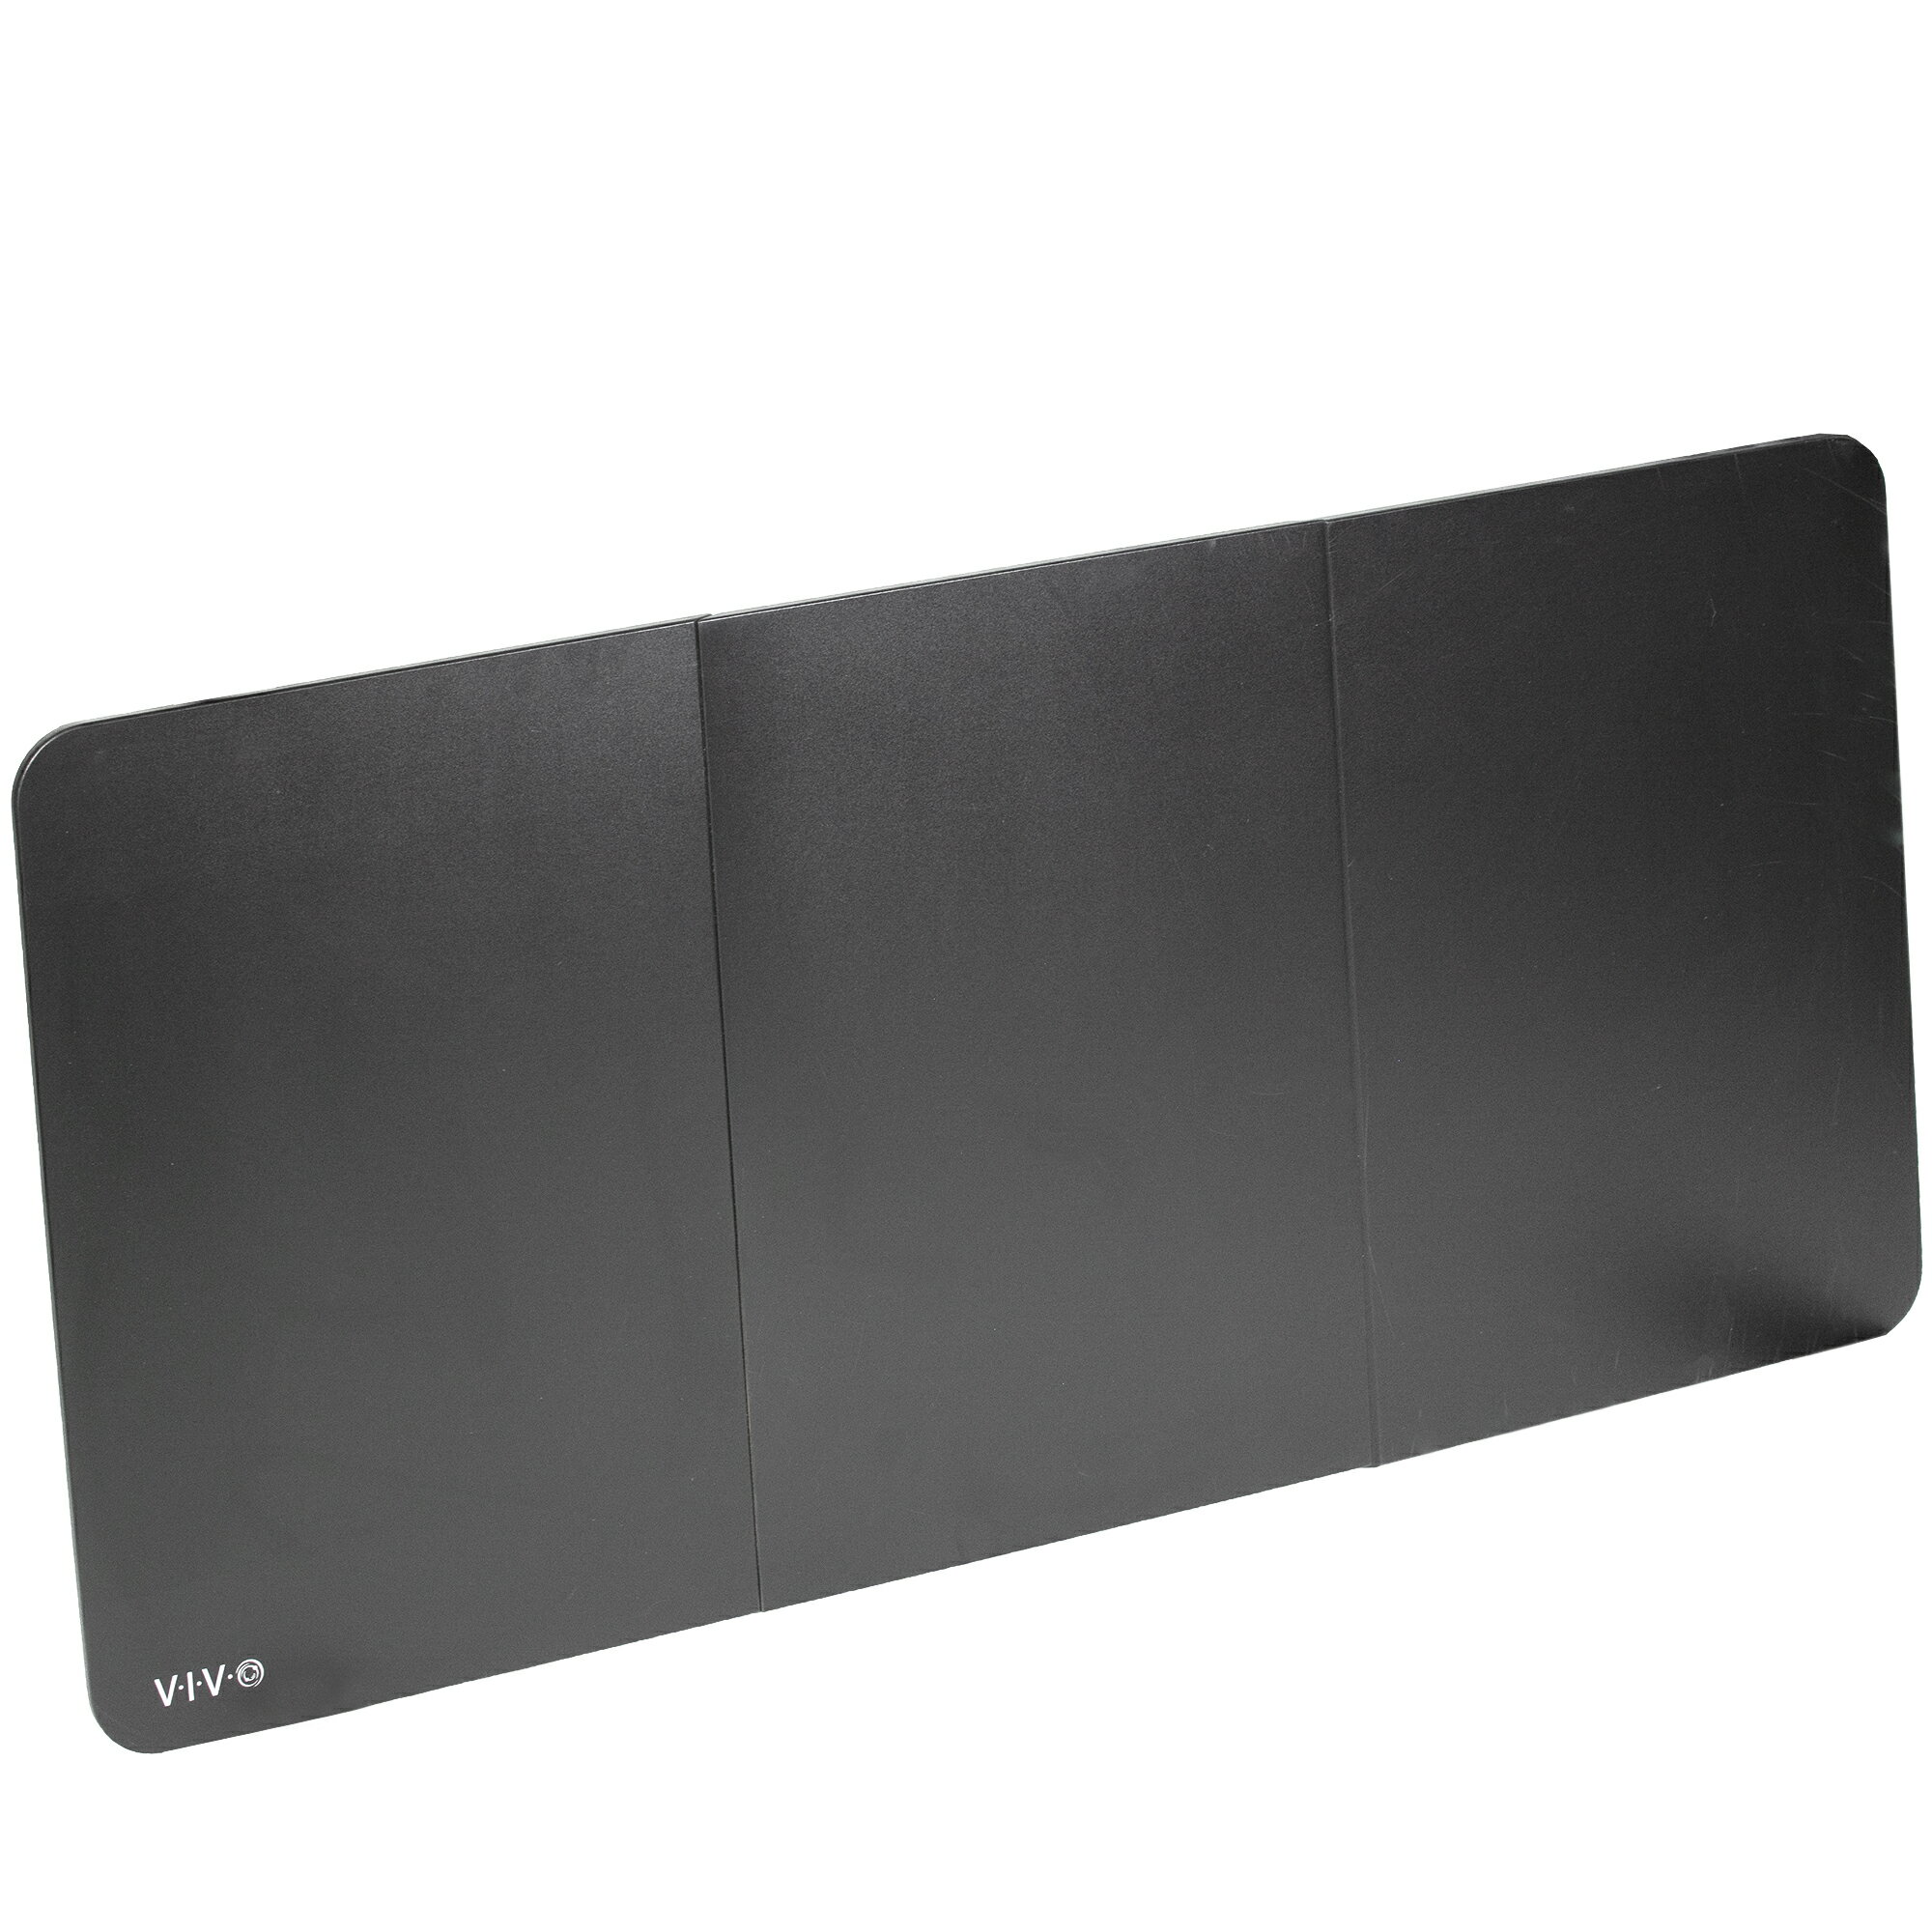 Vivo Vivo Black 60 X 28 Inch Universal Table Top For Height